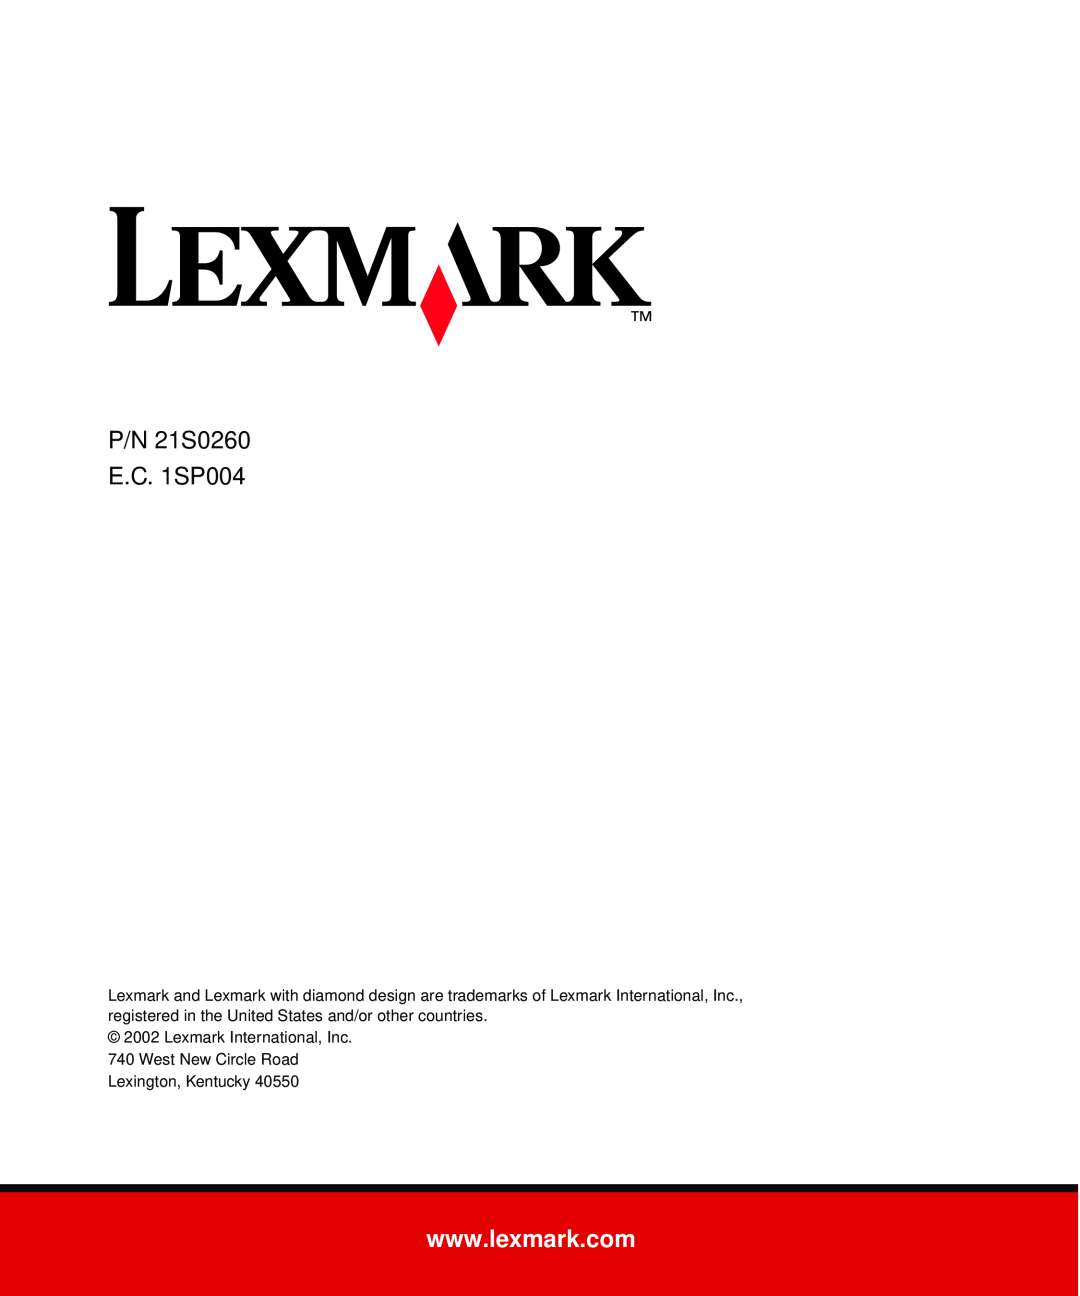 Lexmark 323, 321 setup guide P/N 21S0260 E.C. 1SP004, Lexmark International, Inc, West New Circle Road Lexington, Kentucky 